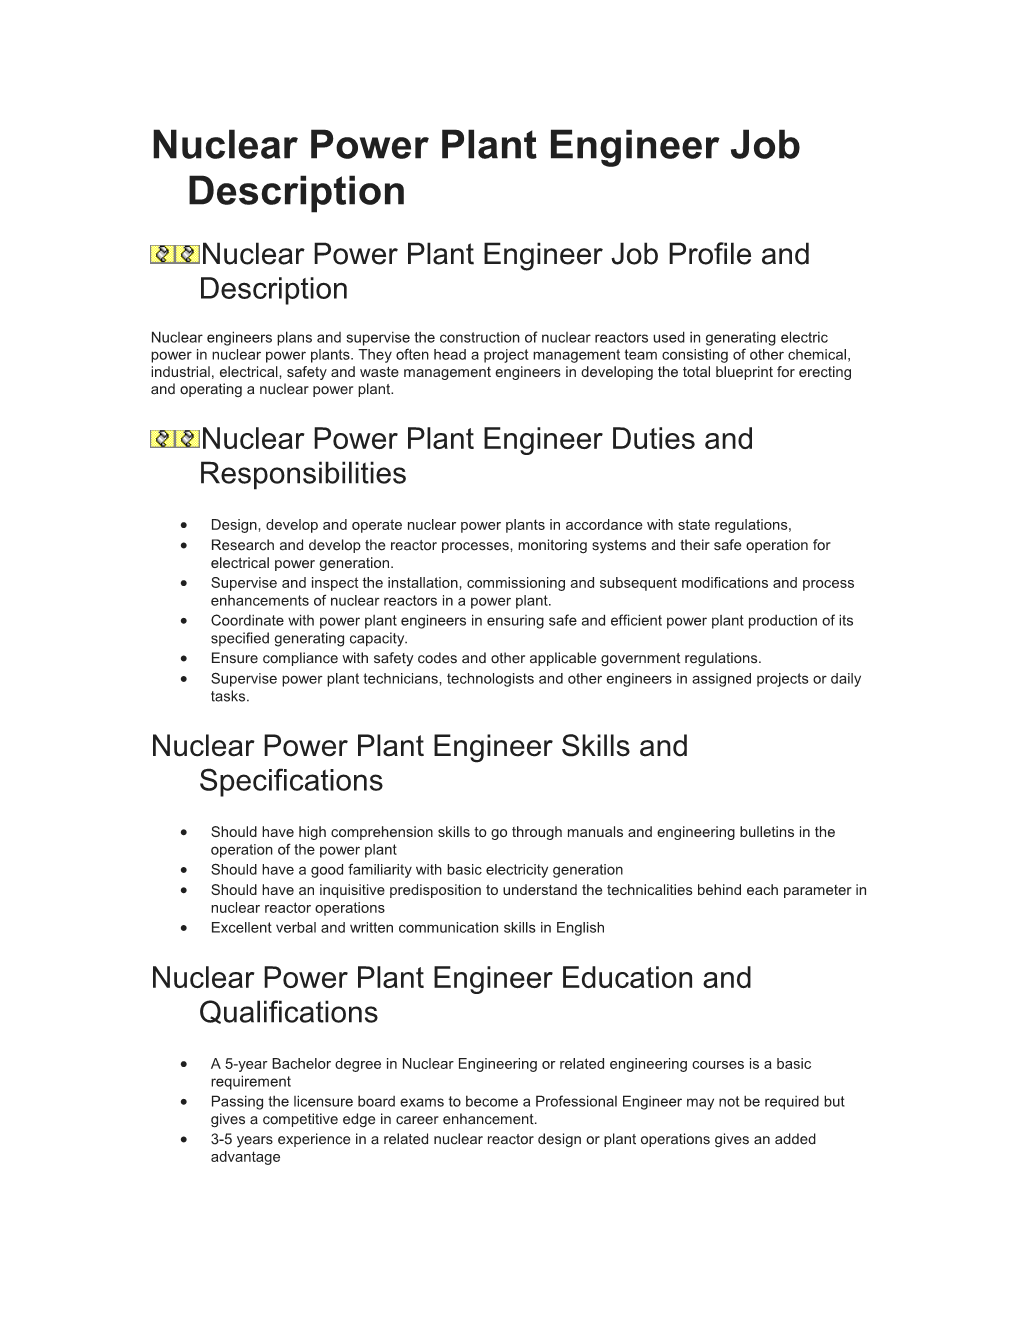 Nuclear Power Plant Engineer Job Description